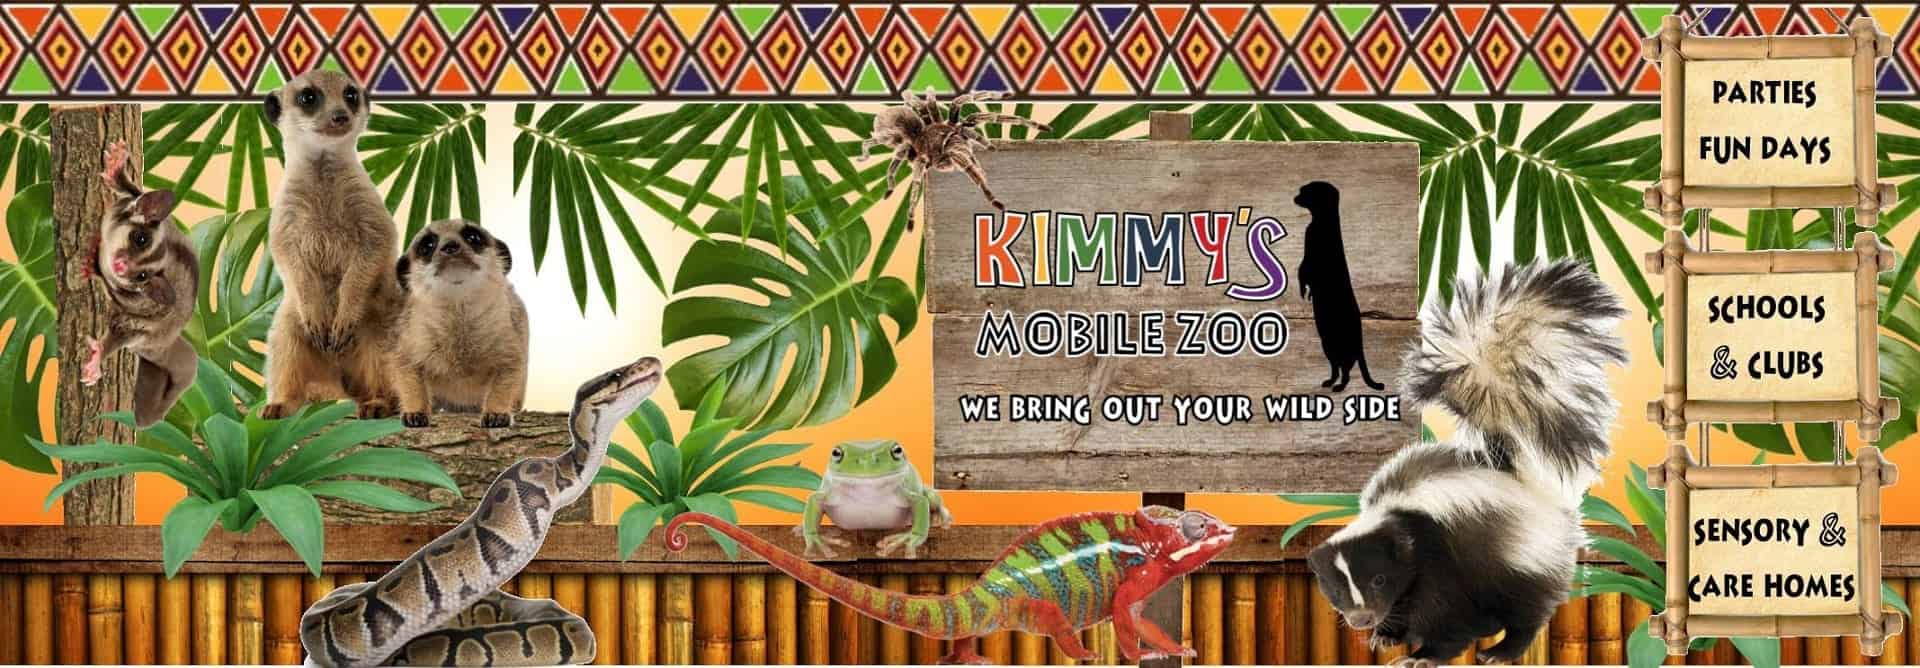 Kimmys Mobile Petting Zoo in UK